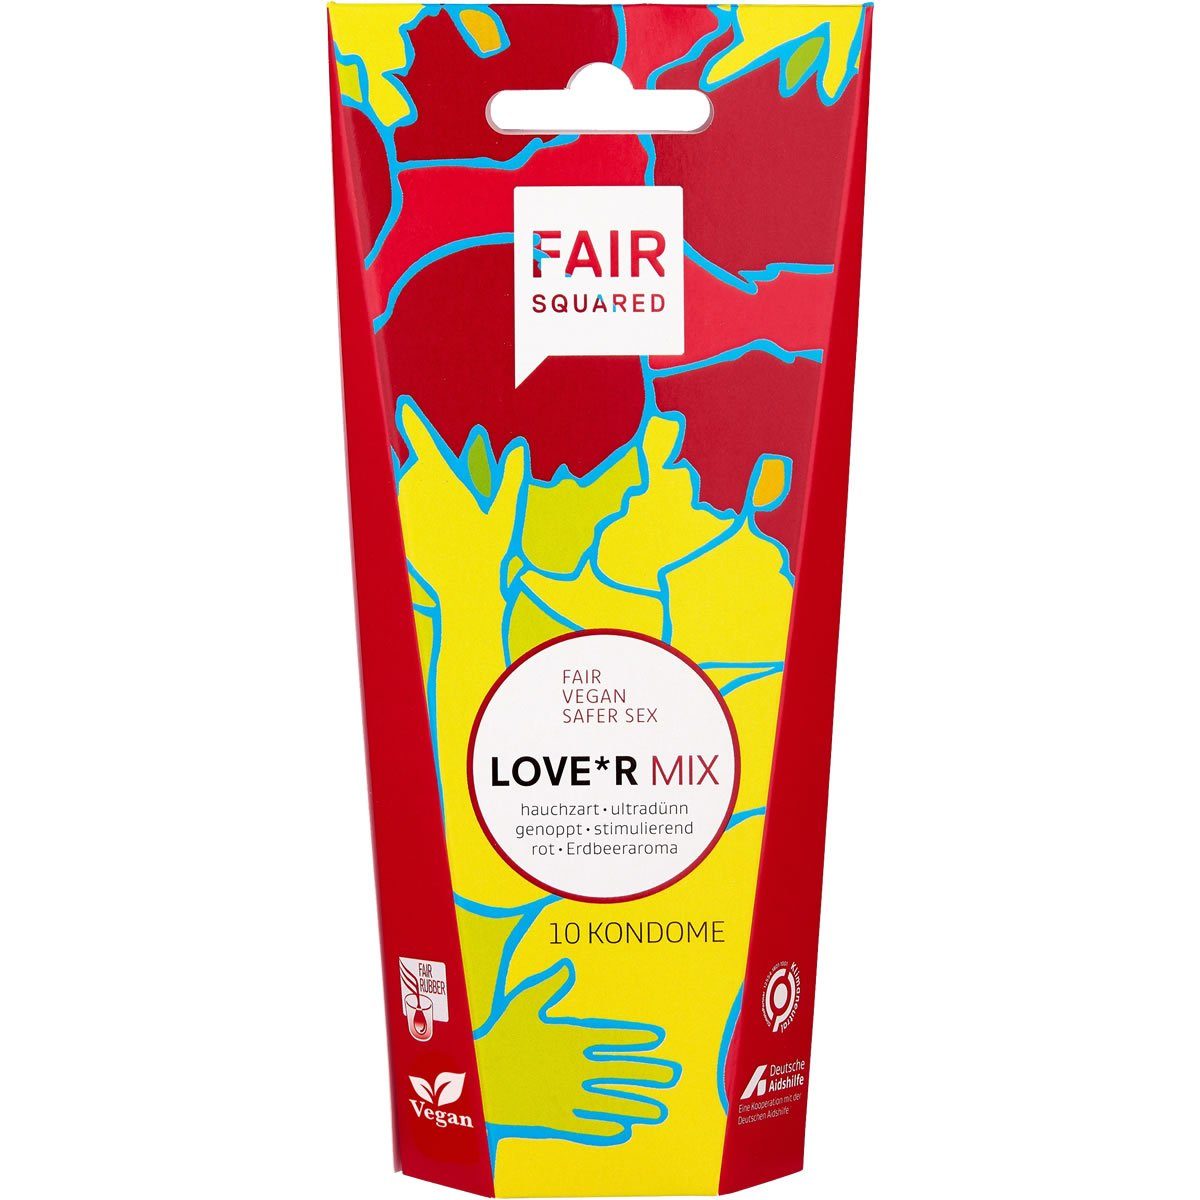 Kondome Fair Squared - Sortiment 10 Love your Packung Fair-Trade-Kondome Mix St., mit, Love*r im vegane Celebrate